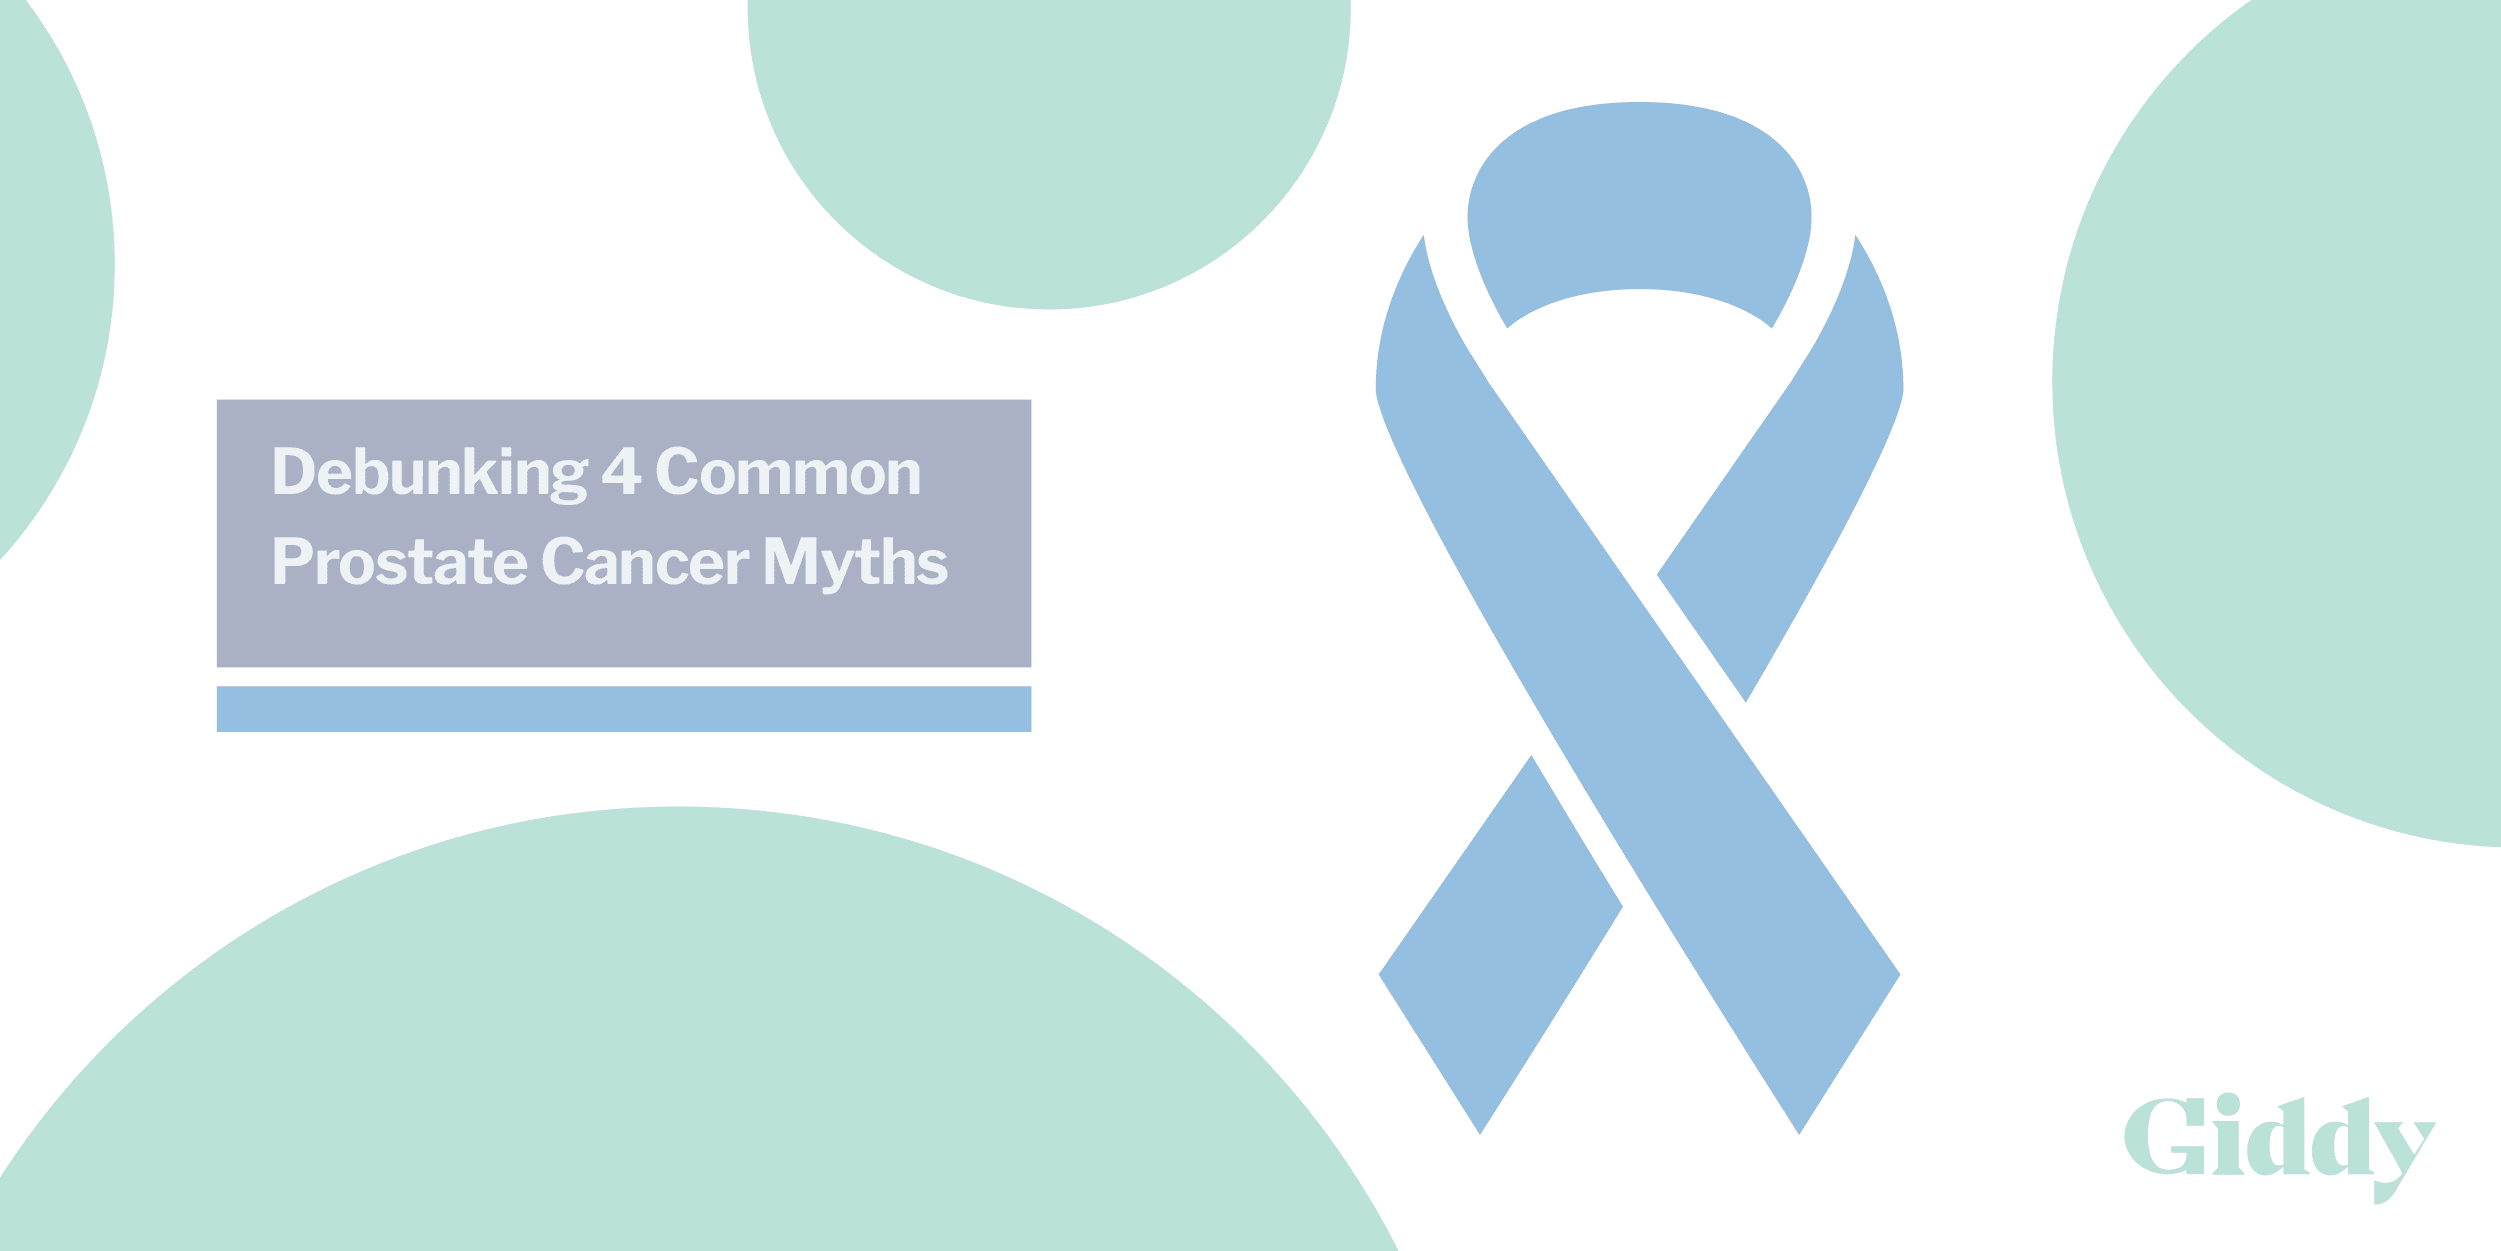 Debunking 4 Common Prostate Cancer Myths